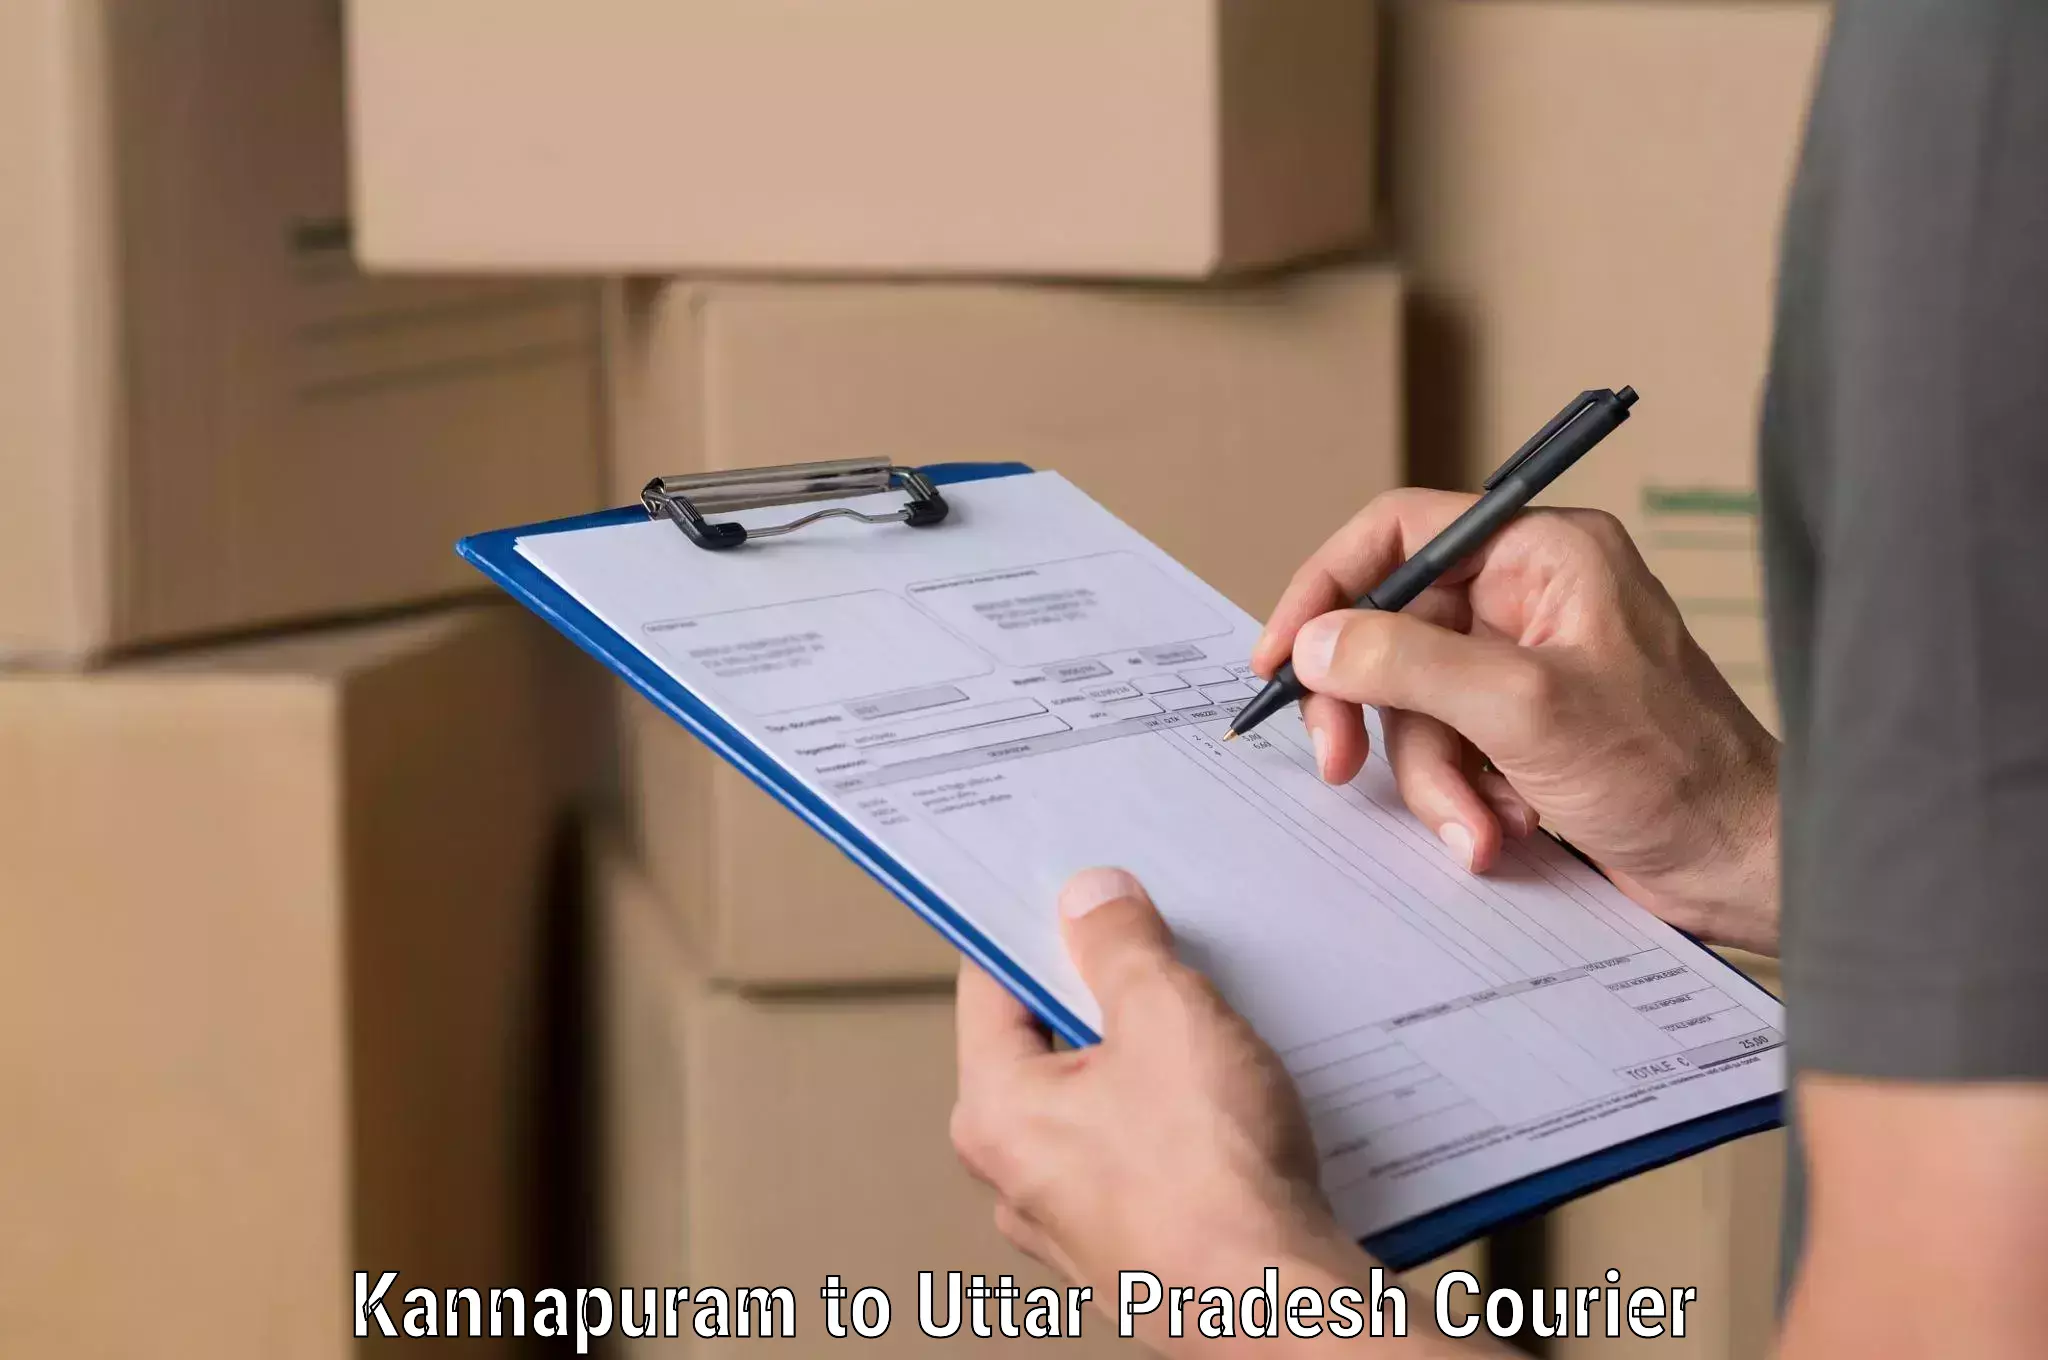 Premium courier services in Kannapuram to Jalesar